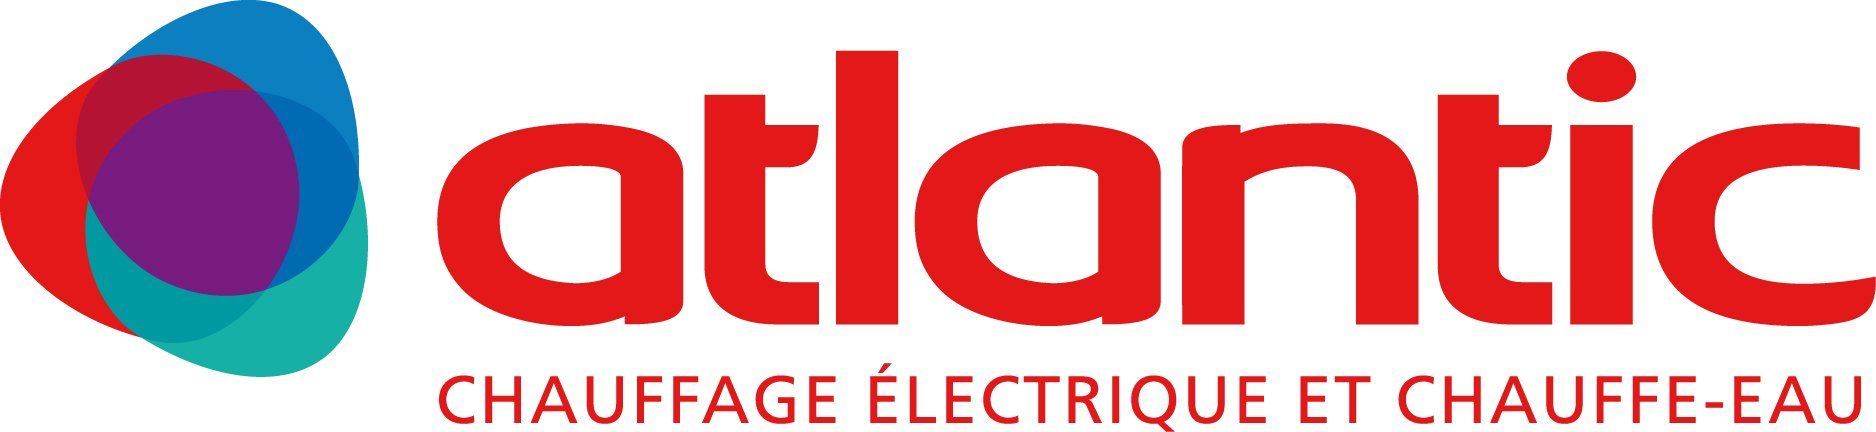 Logo_atlantic-chauffage